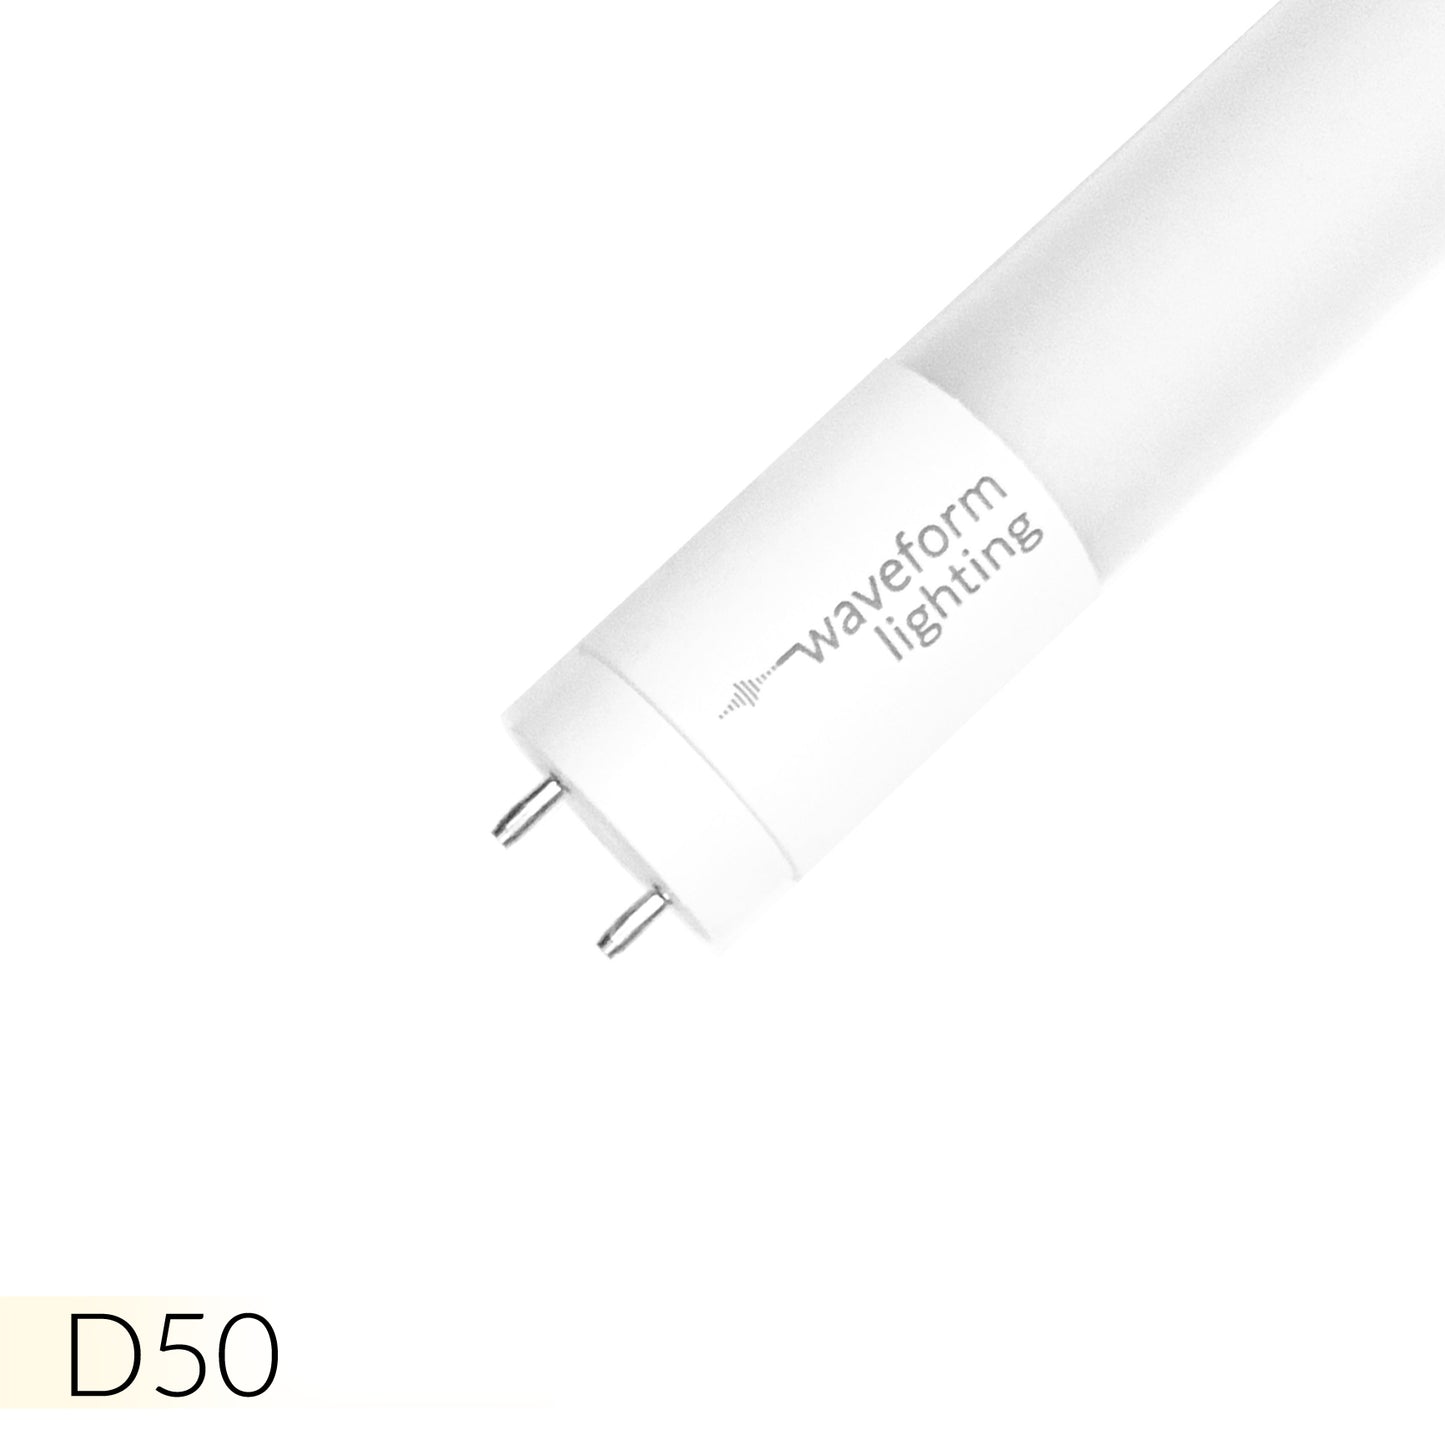 D50 5000K T8 LED Tube Lights for Color Matching (ISO3664:2000)